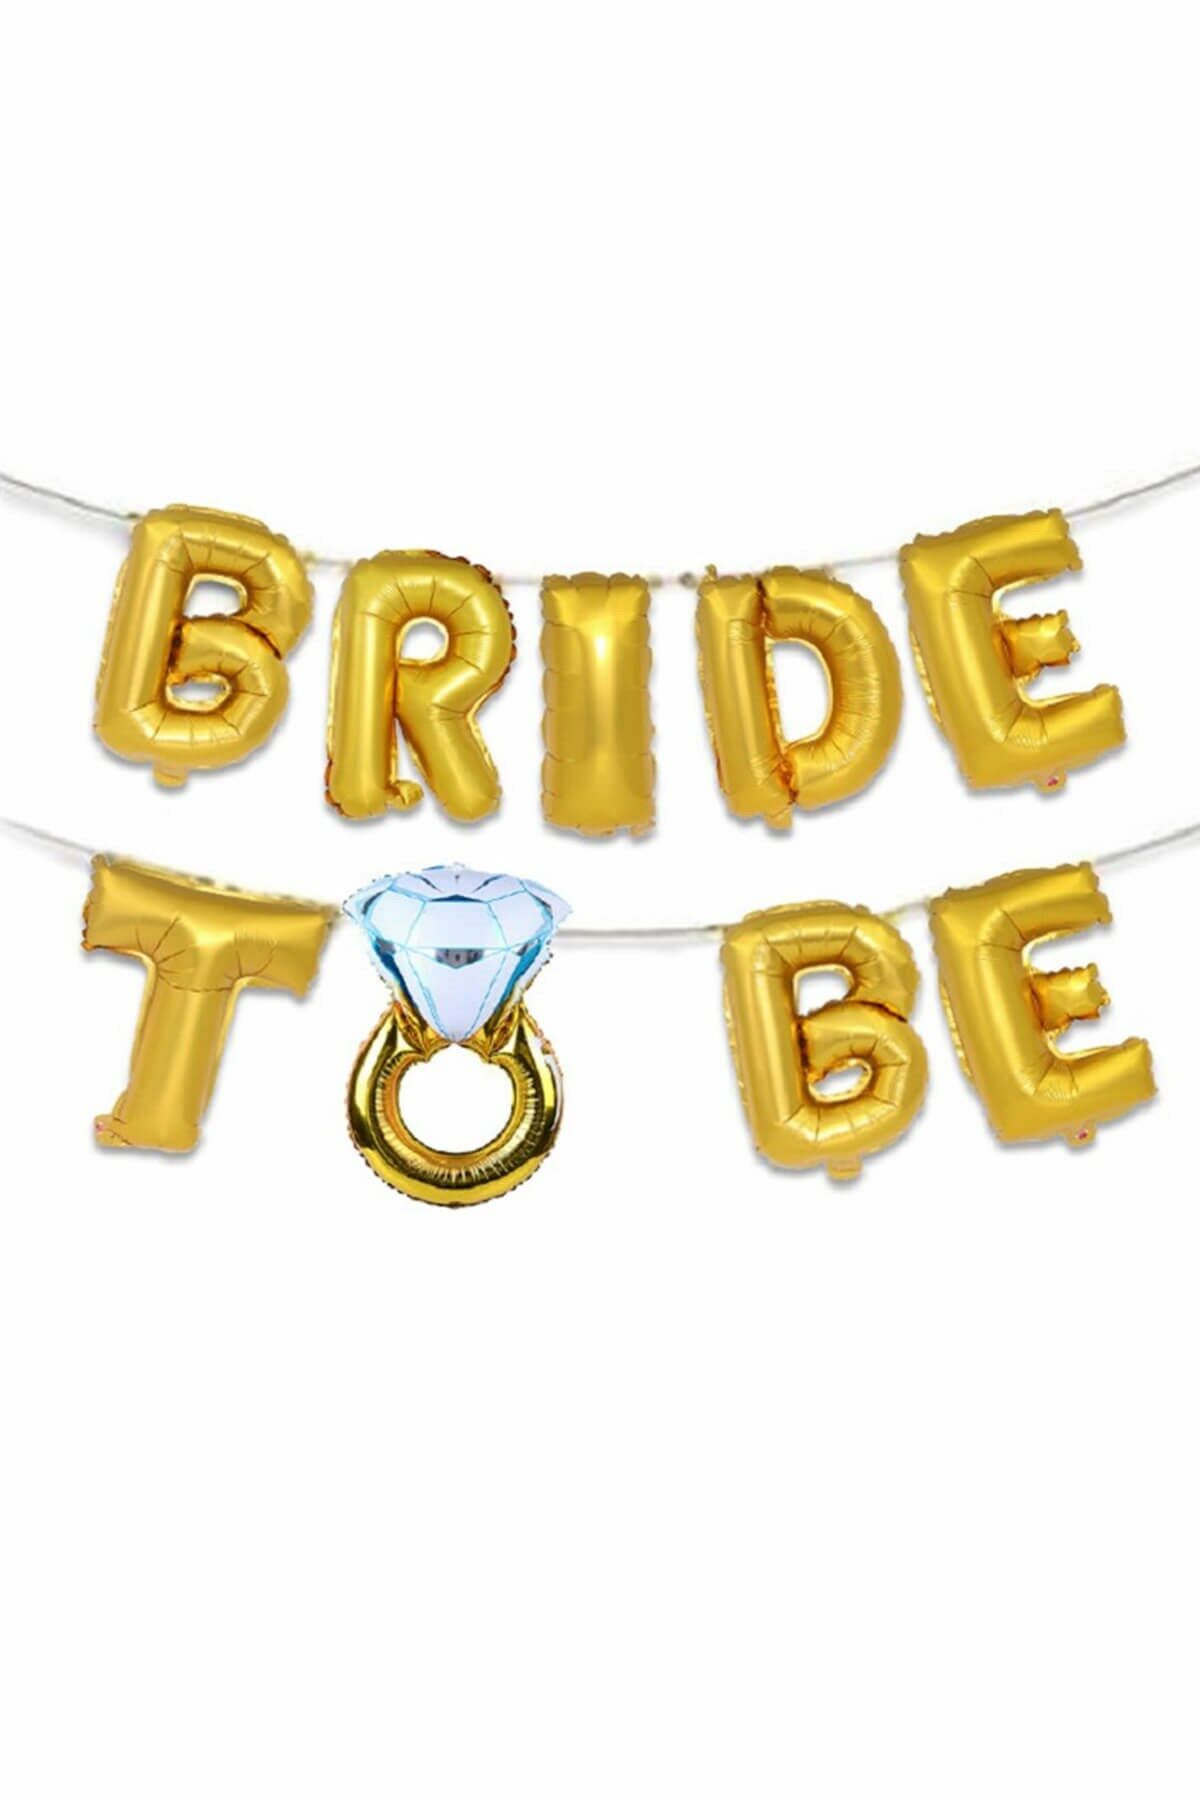 Tek Taşlı Bride to Be Folyo Balon Paketi Gold Renk